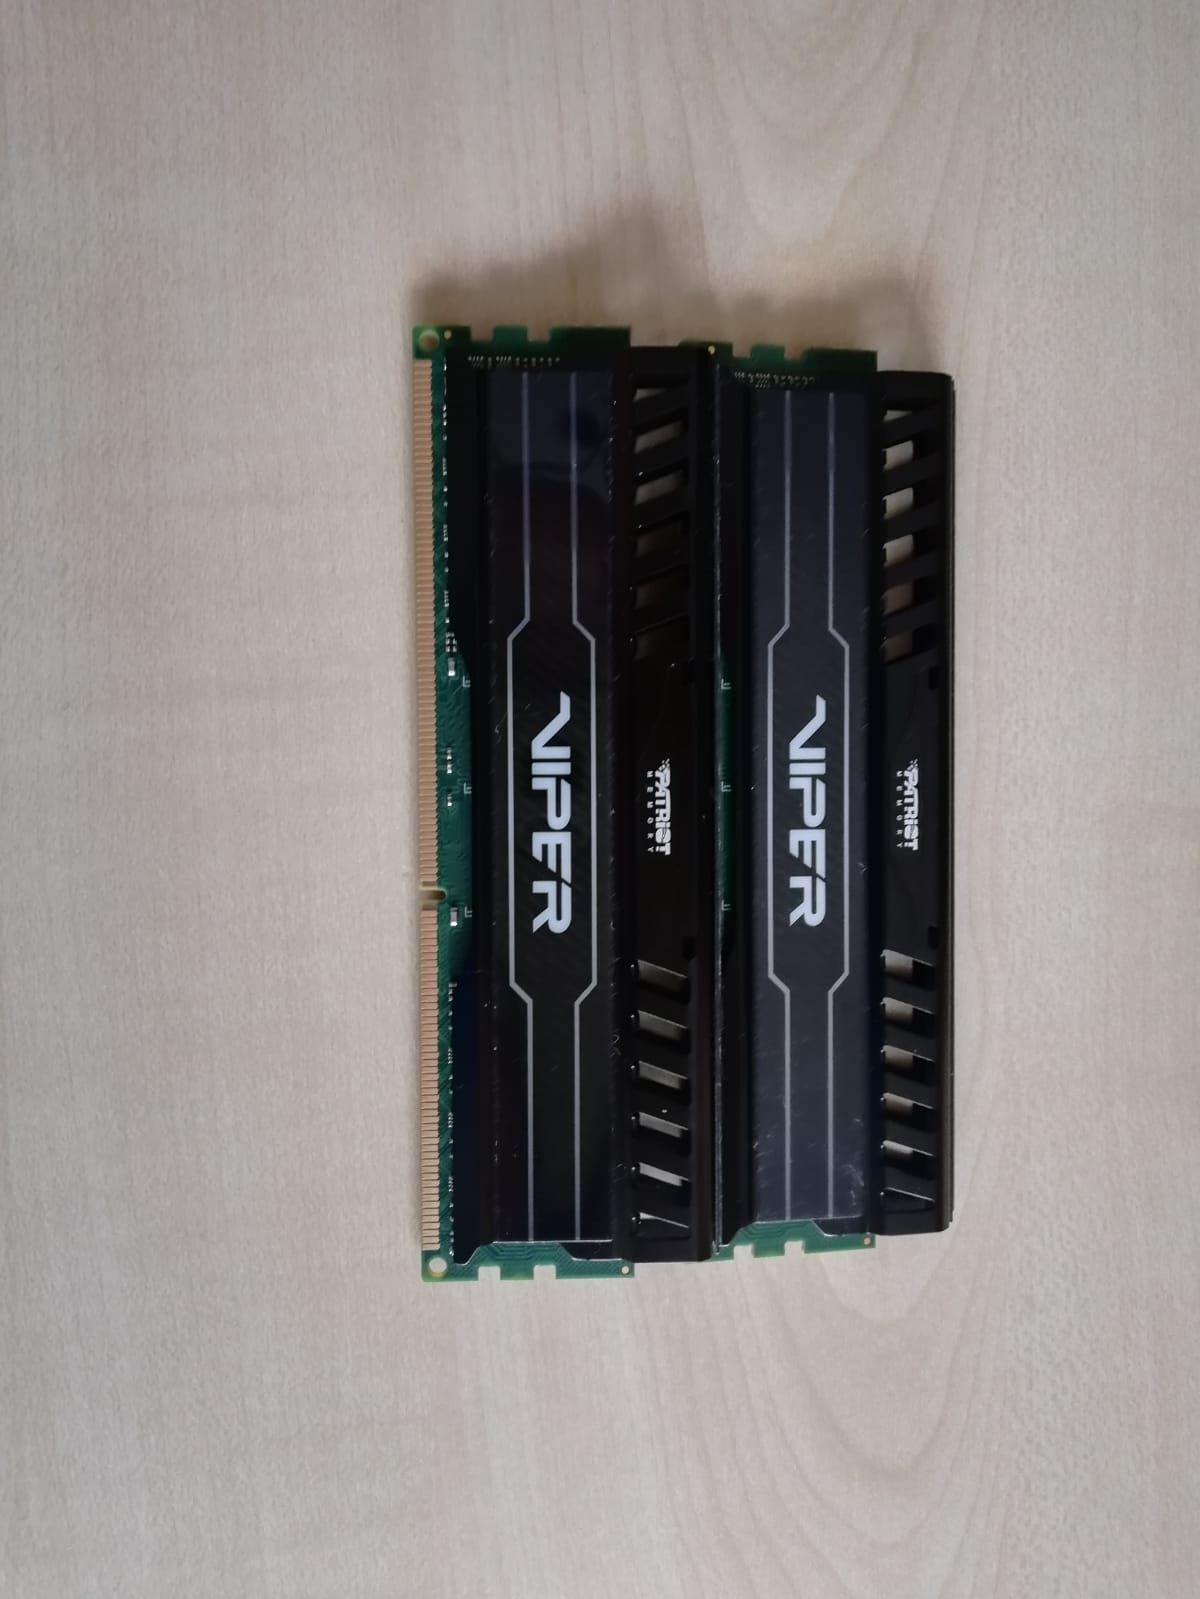 Pamięć RAM Vipper DDR3 1866MHz 2x8GB